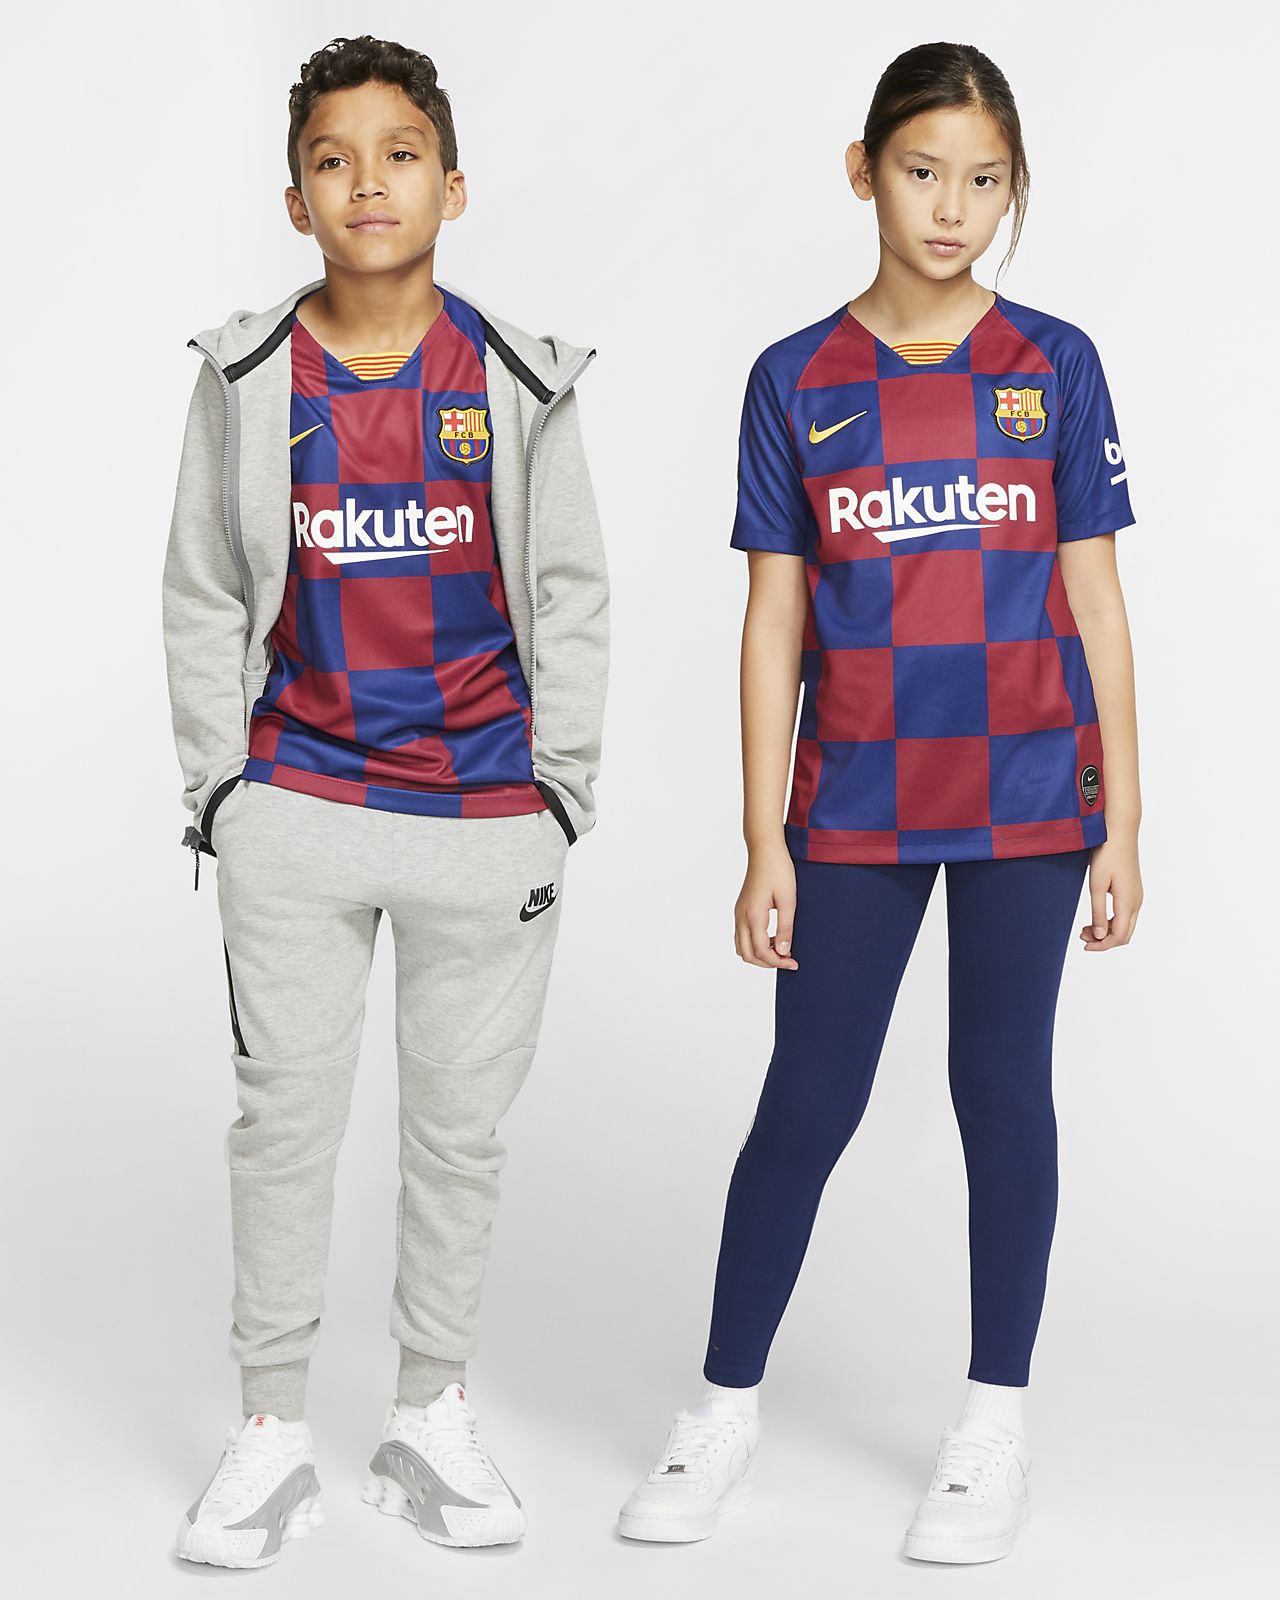 barcelona soccer jacket